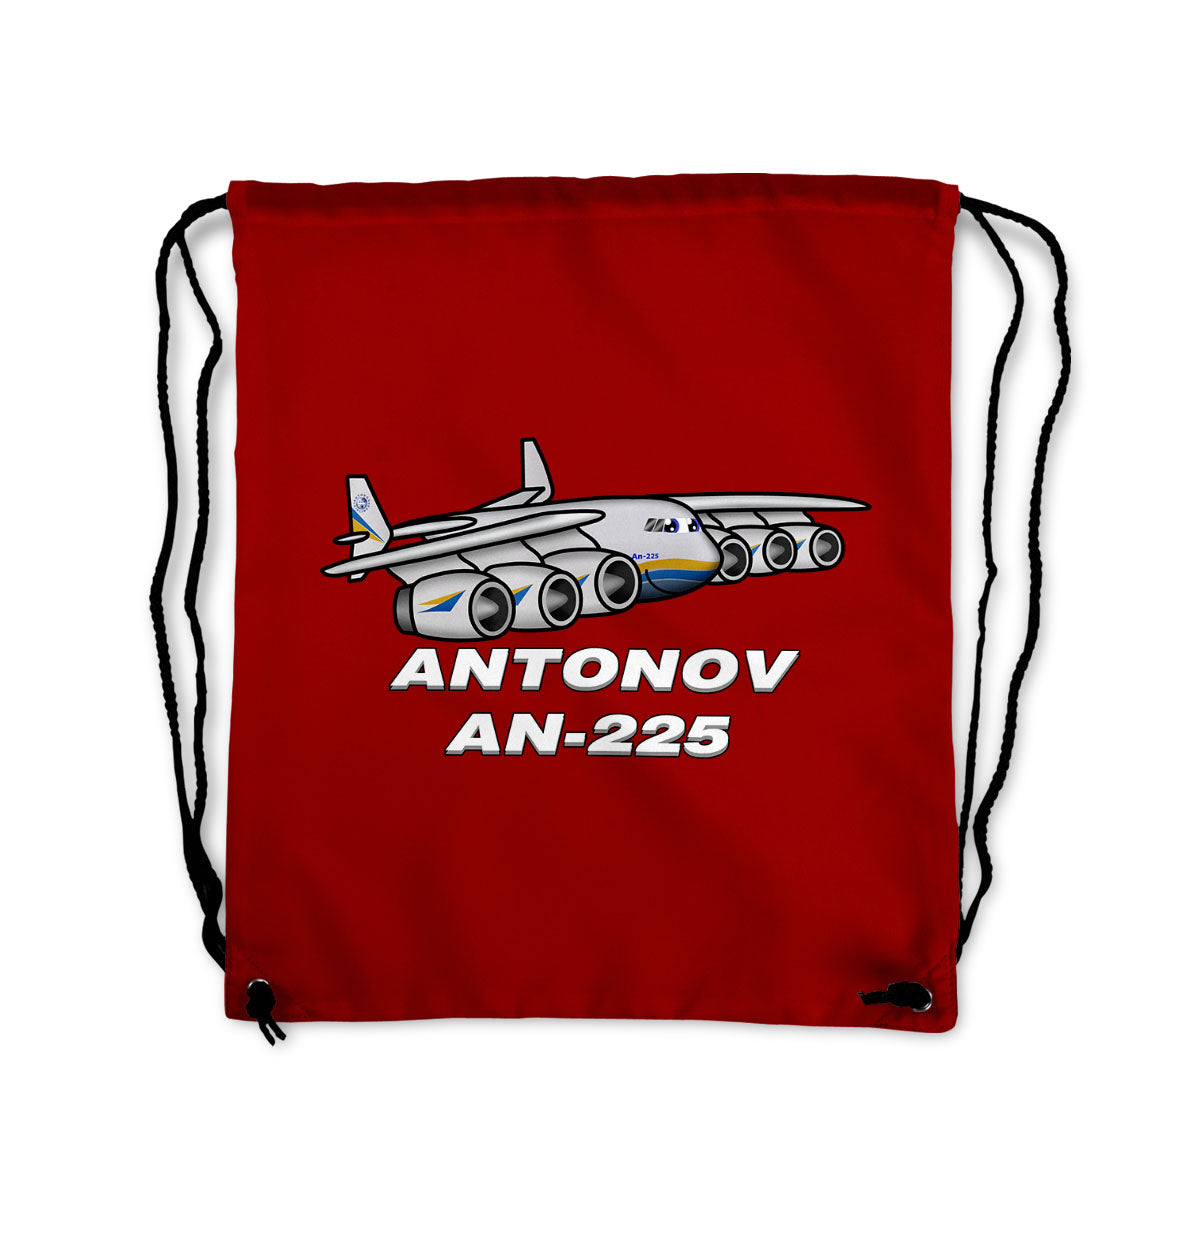 Antonov AN-225 (25) Designed Drawstring Bags